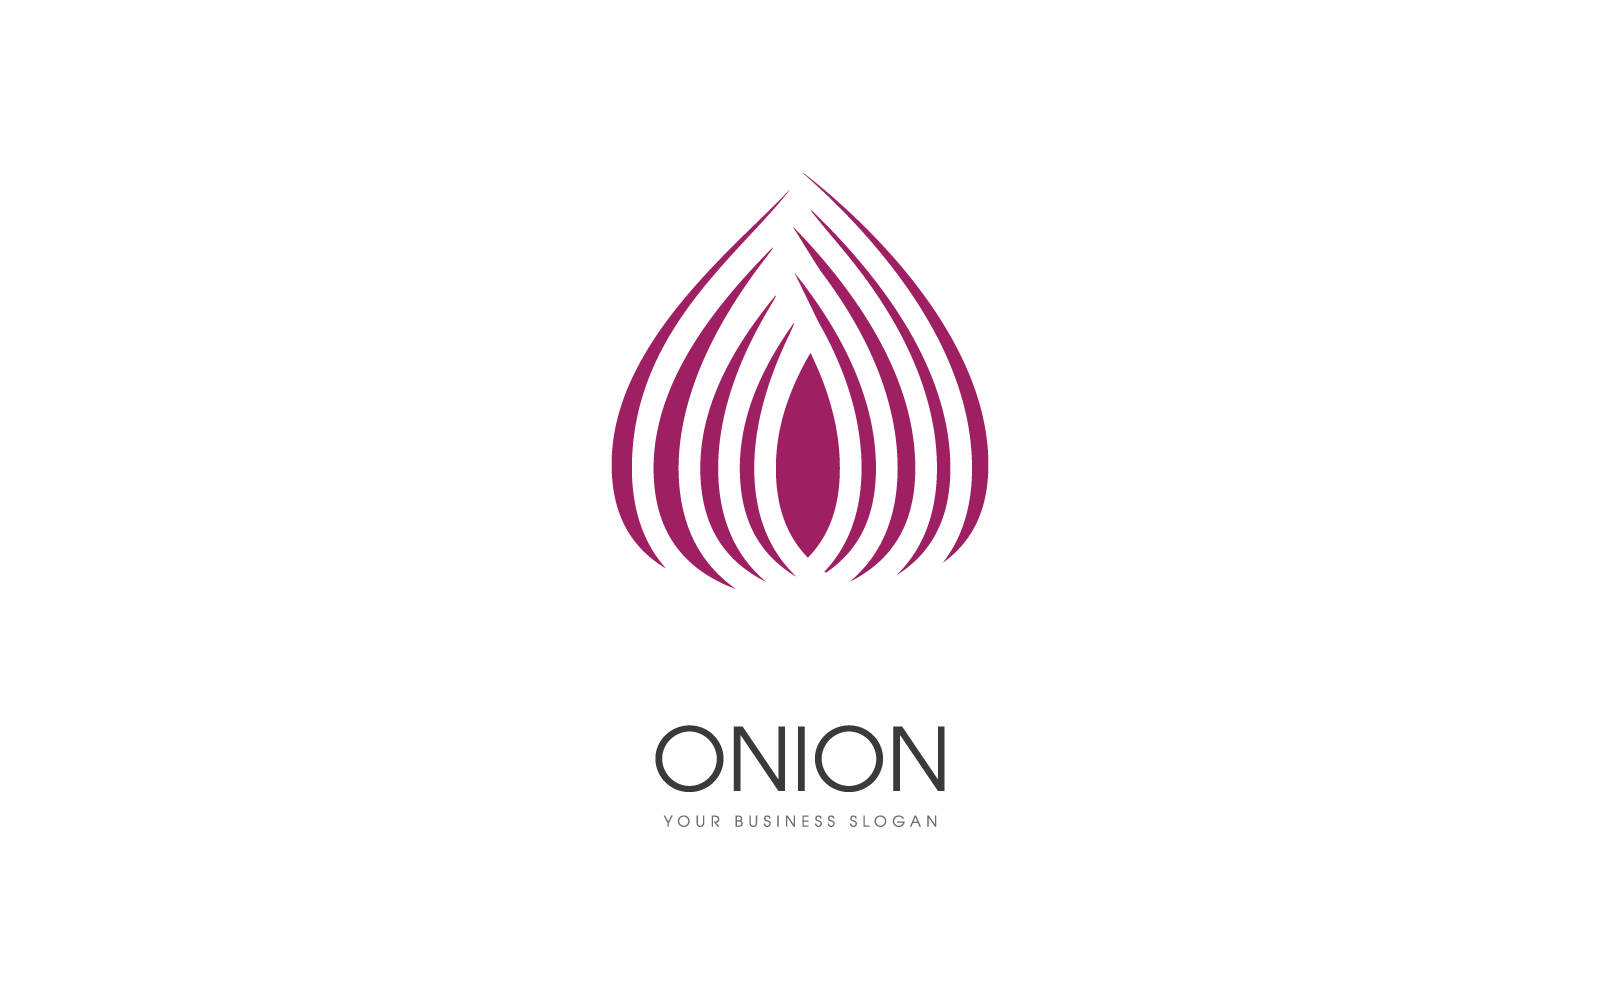 Onion on white background illustration vector design Logo Template